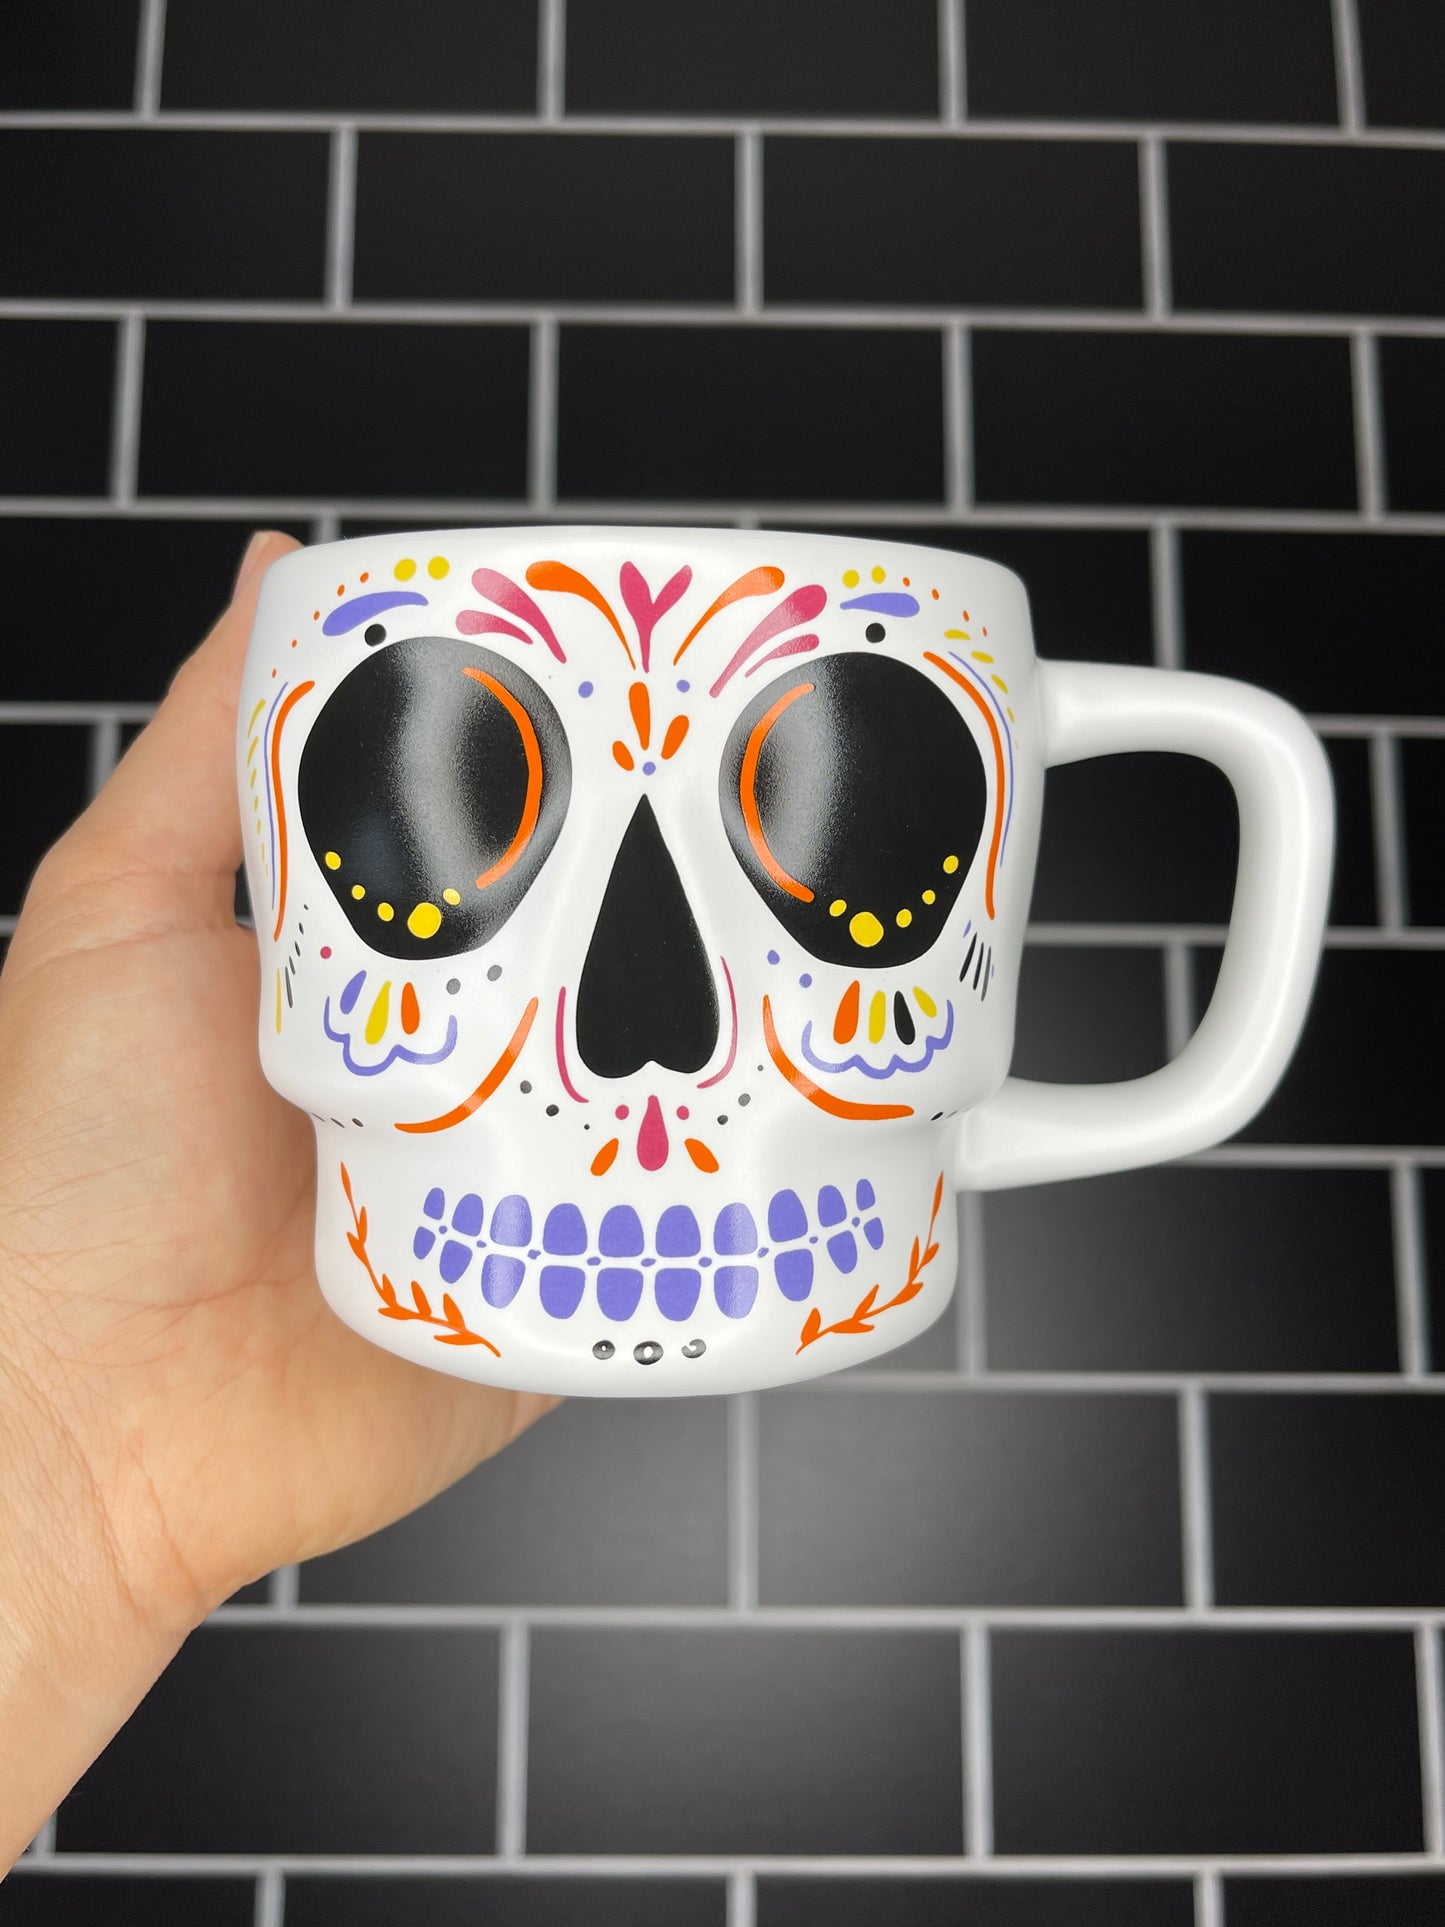 Glow in the Dark + Grey Studded + Sugar Skull Day of the Dead Mug - Mexico